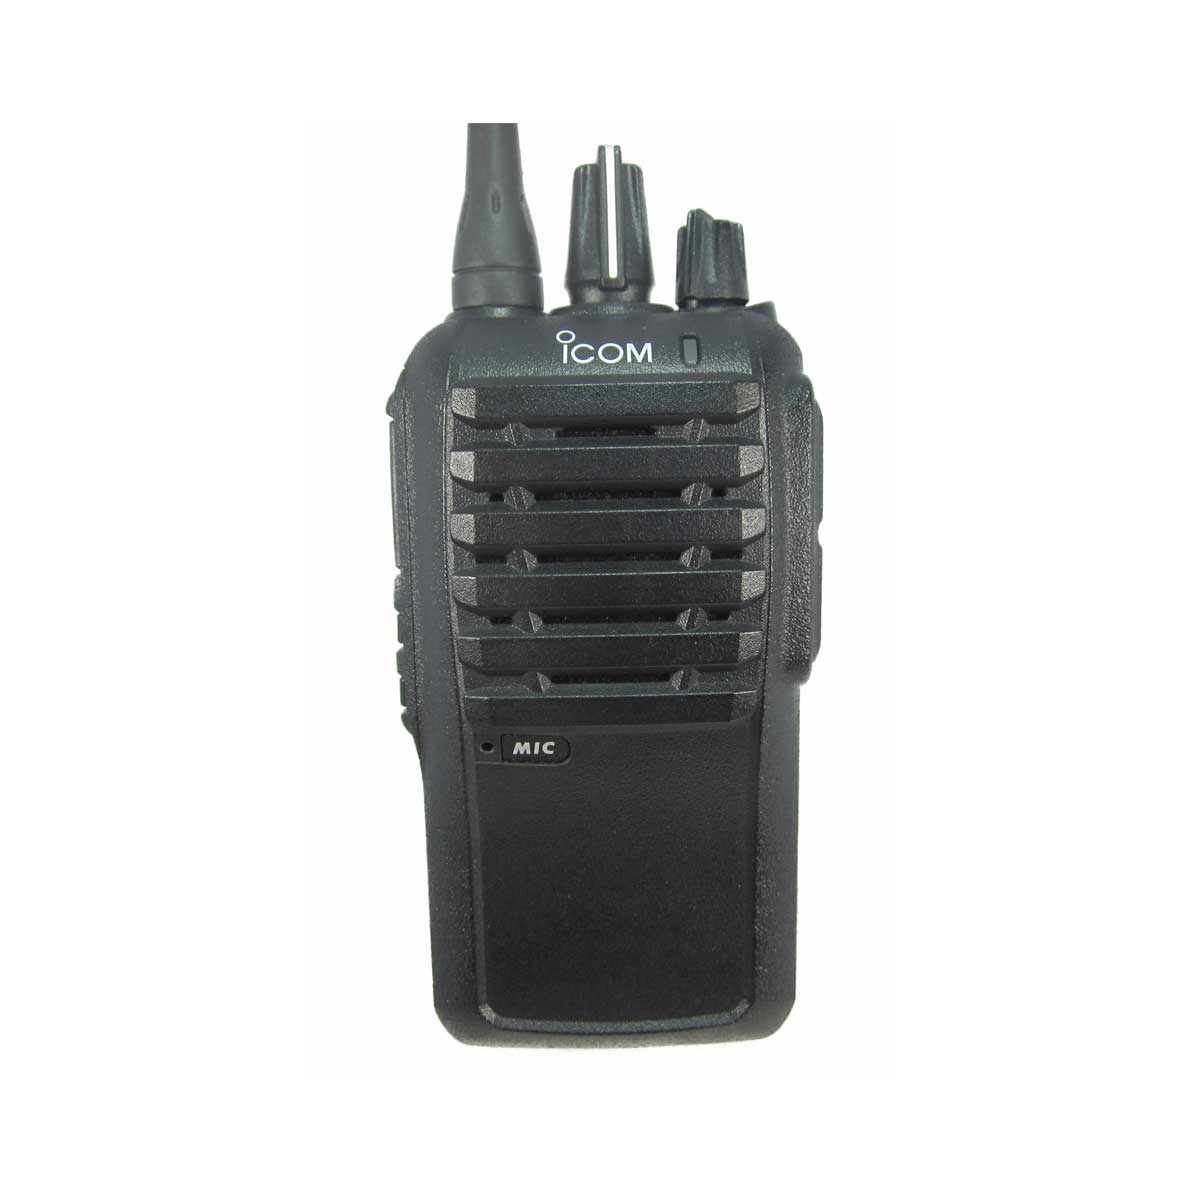 Radio Icom IC-F3003 Analógico VHF 136-174 MHz